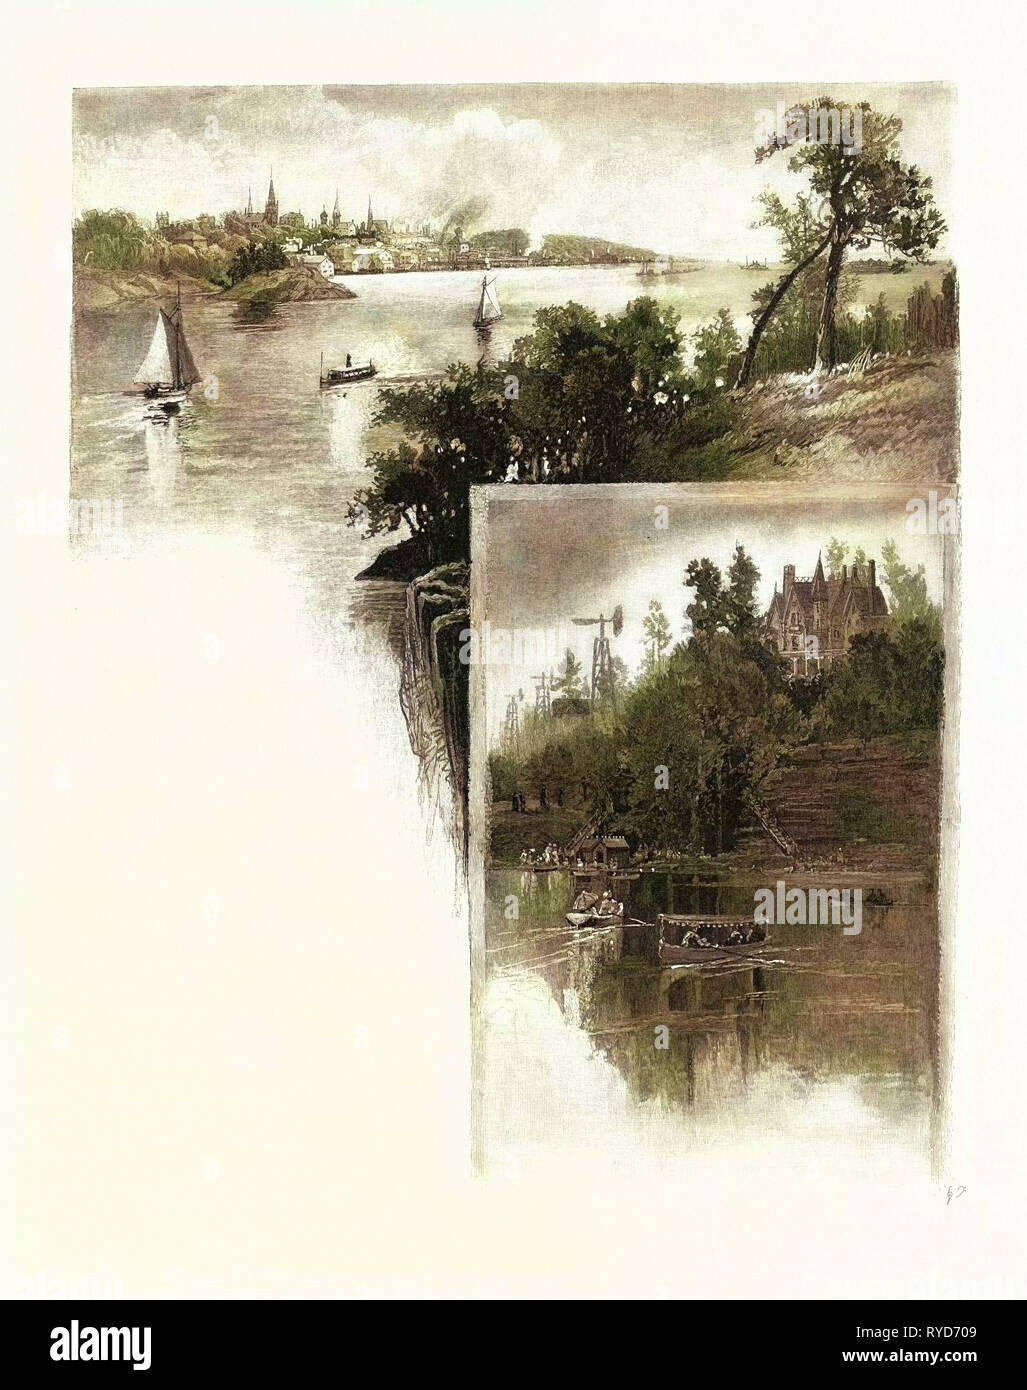 Eastern Ontario, Brockville (Top), the Riverside, Brockville (Bottom), Canada, Nineteenth Century Engraving Stock Photo